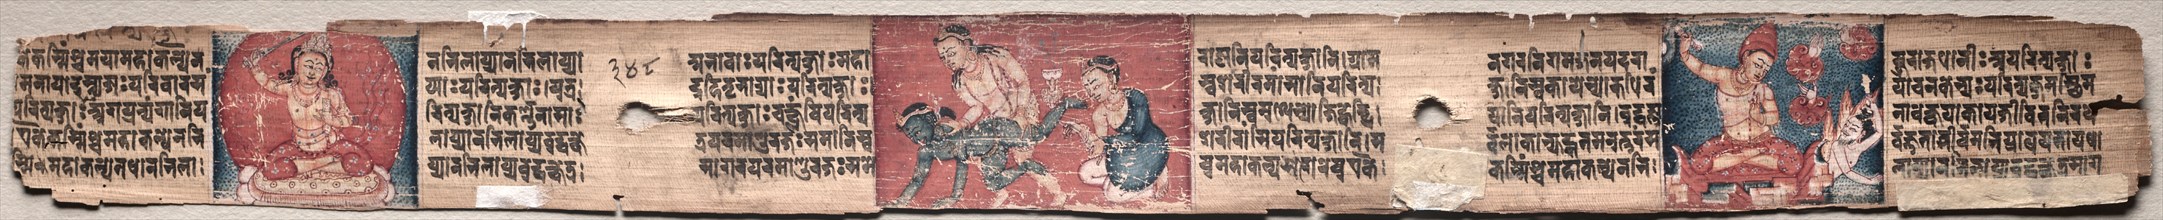 Leaf from Gandavyuha: Sudhana Battles a Demon with a Kneeling Monk, Manjushri, and Vajrapani, from